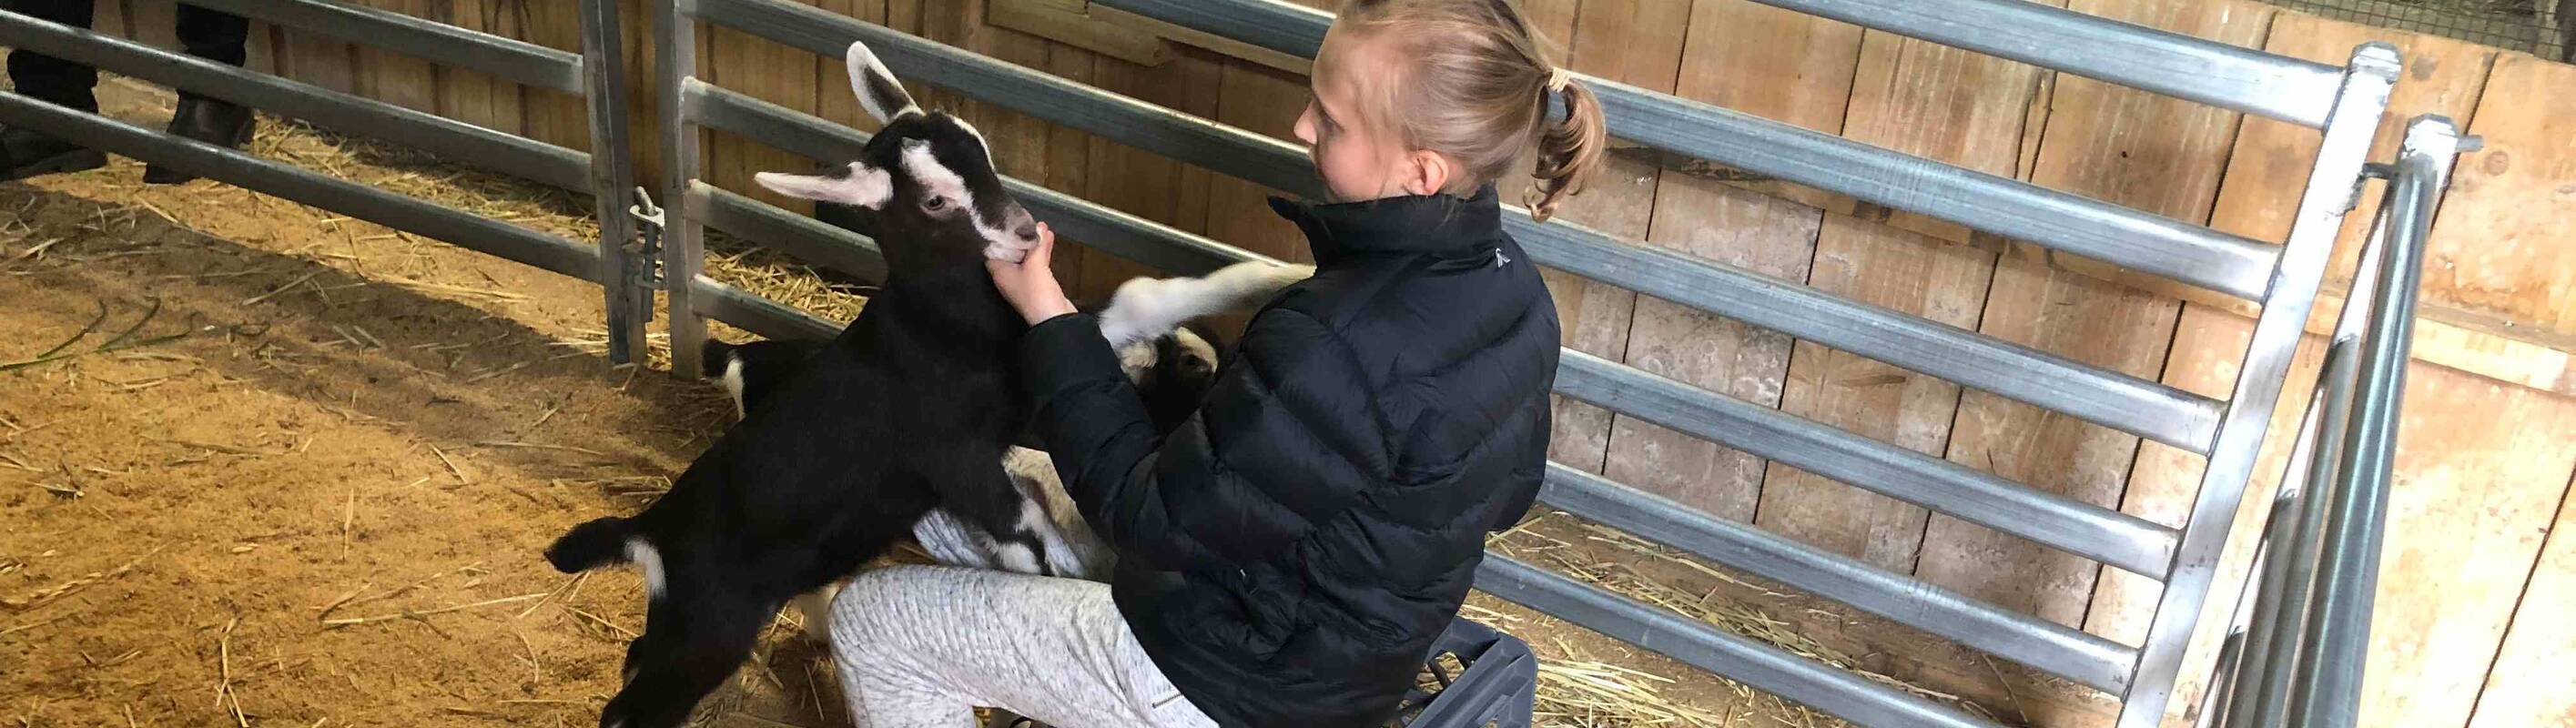 Make-A-Wish Australia wish kid Ava at a farm with a baby goat